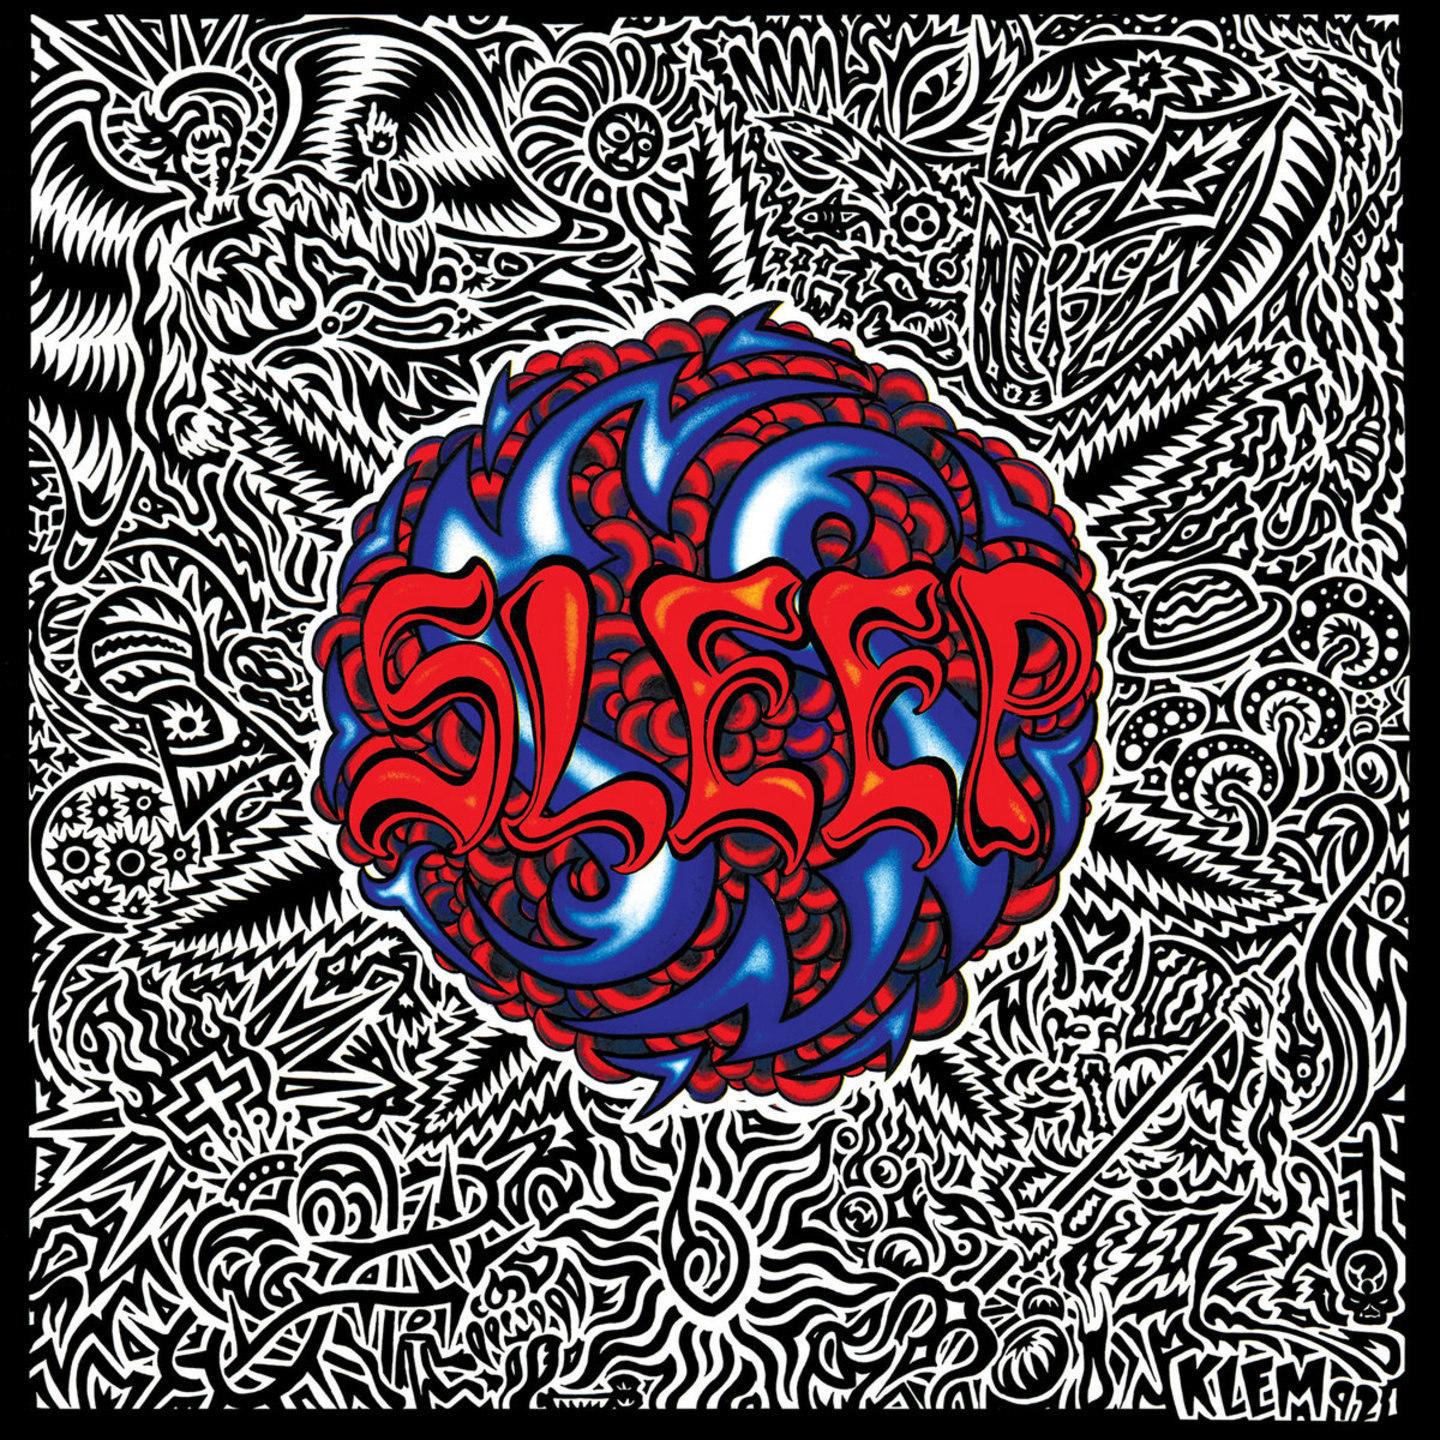 SLEEP - Holy Mountain LP